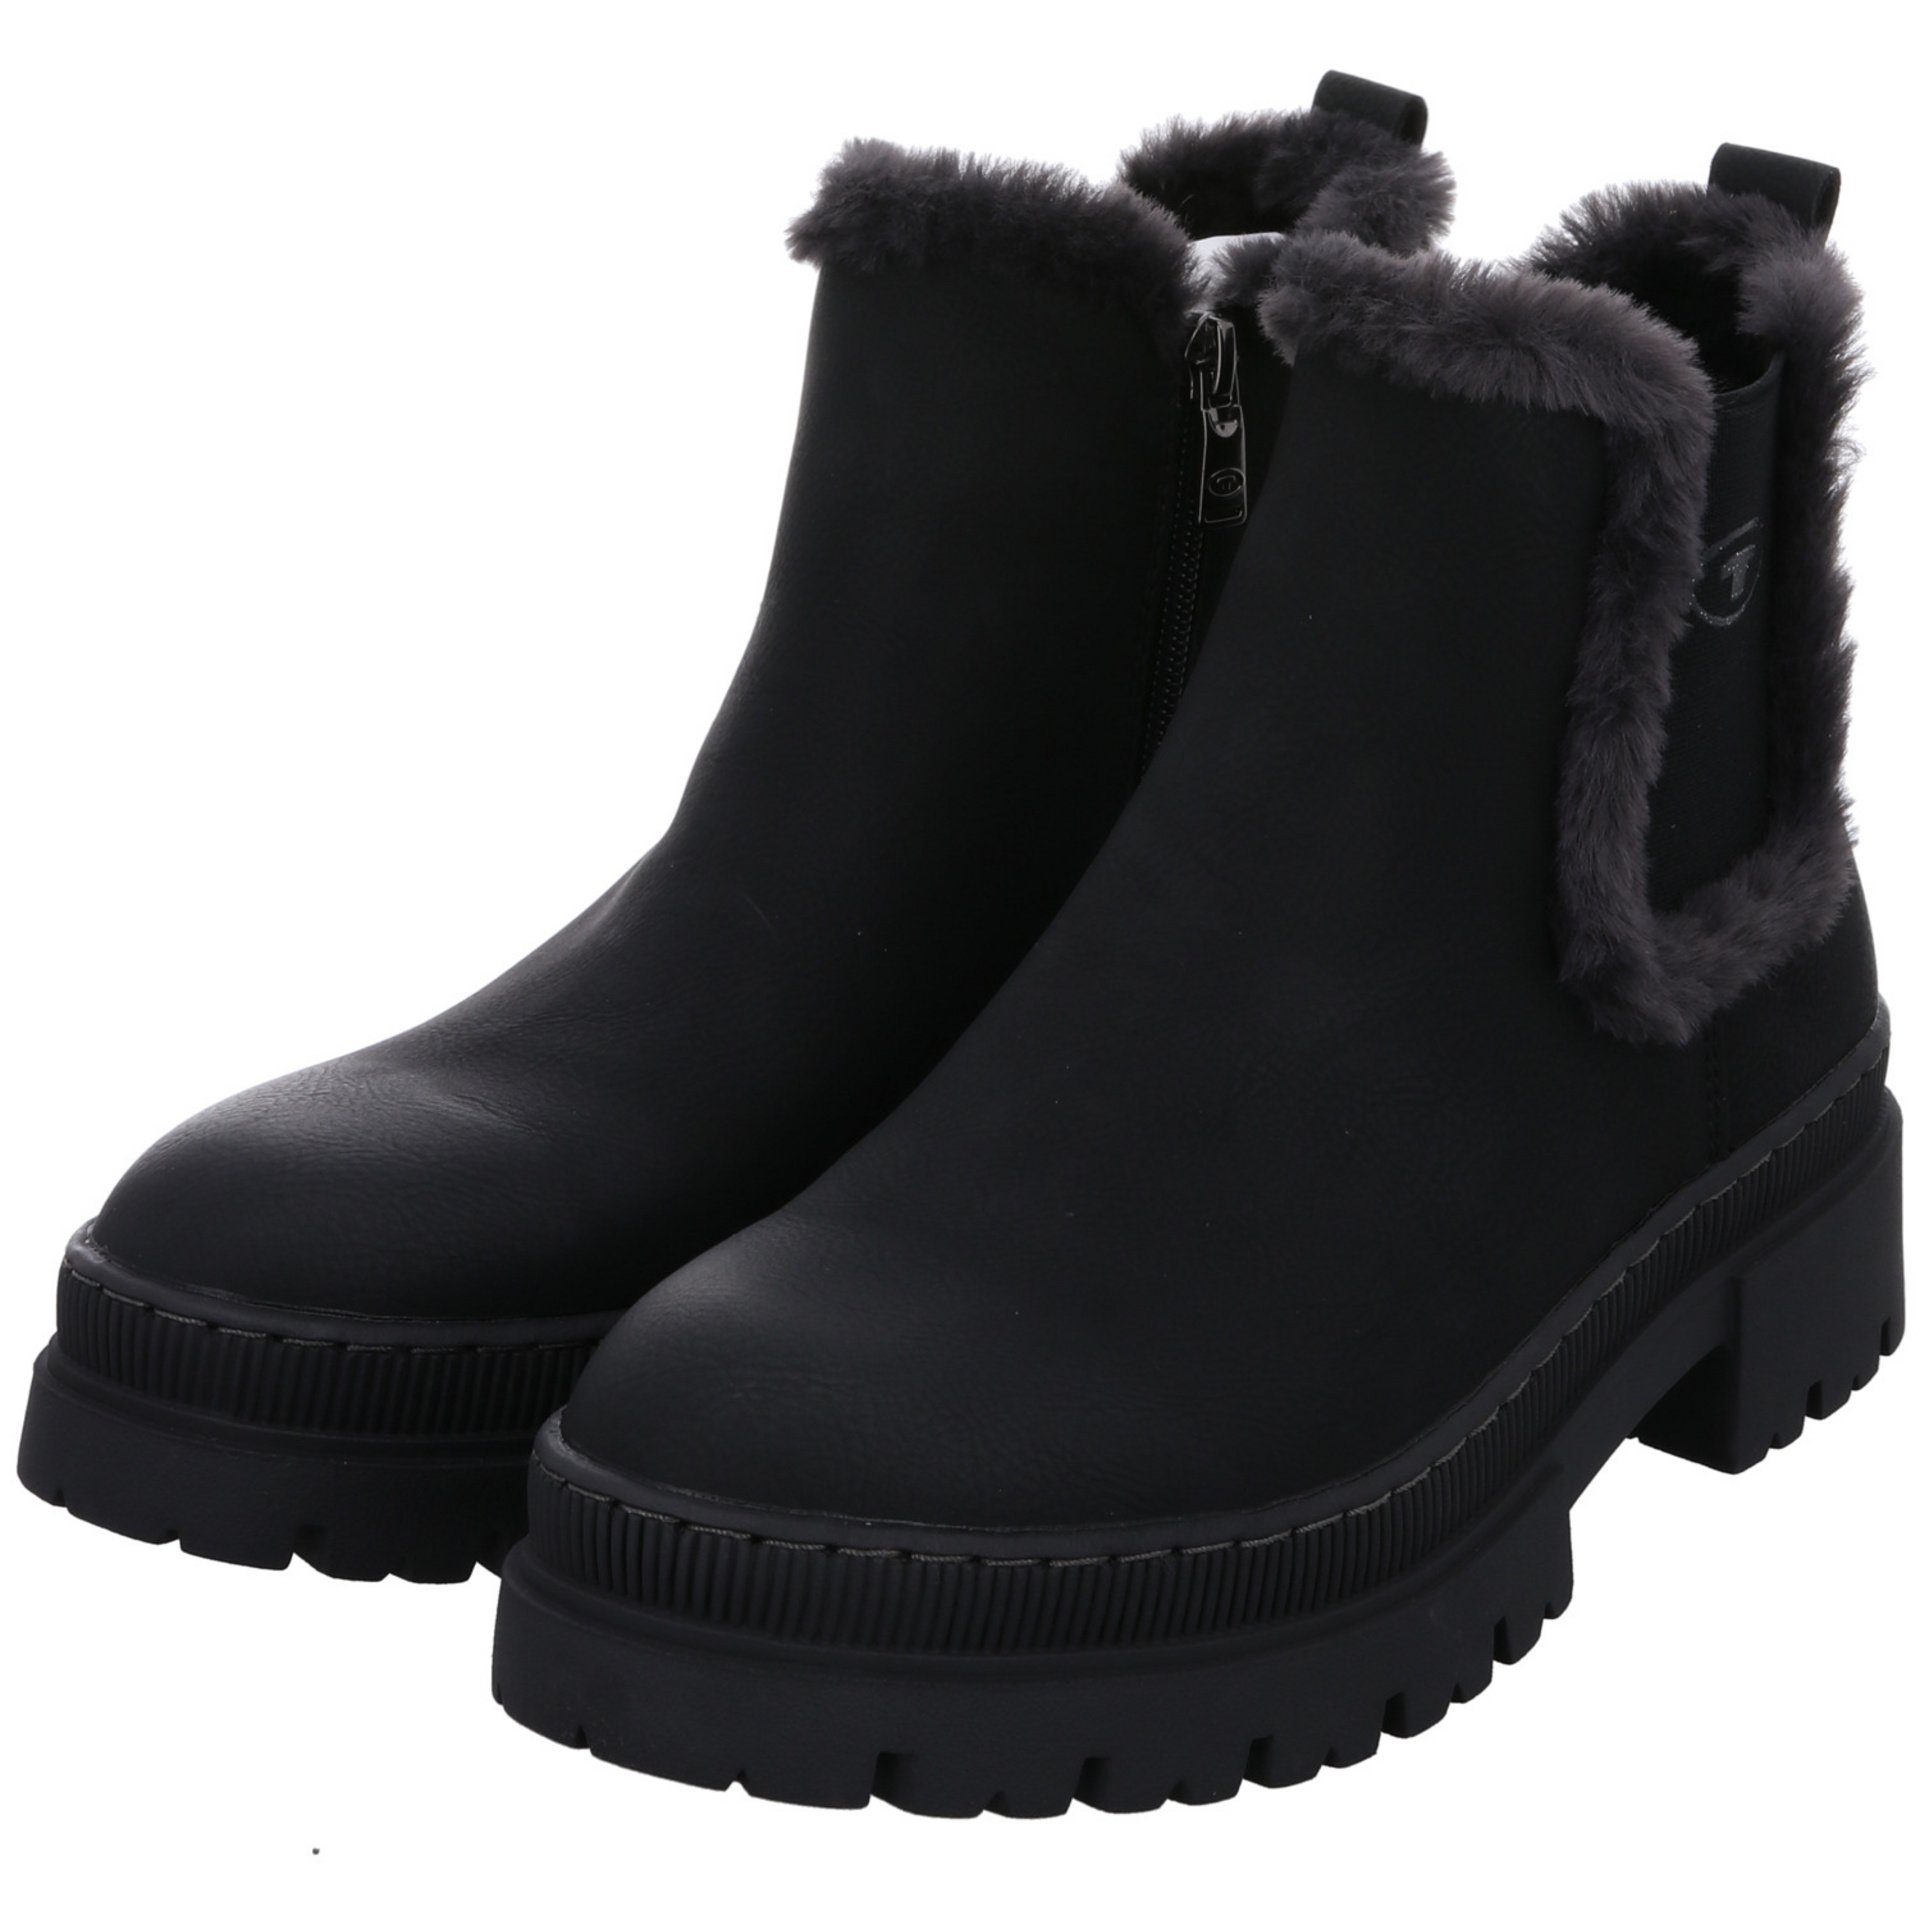 Synthetik Stiefel black Stiefel Chelsea Schuhe TAILOR Damen TOM Boots